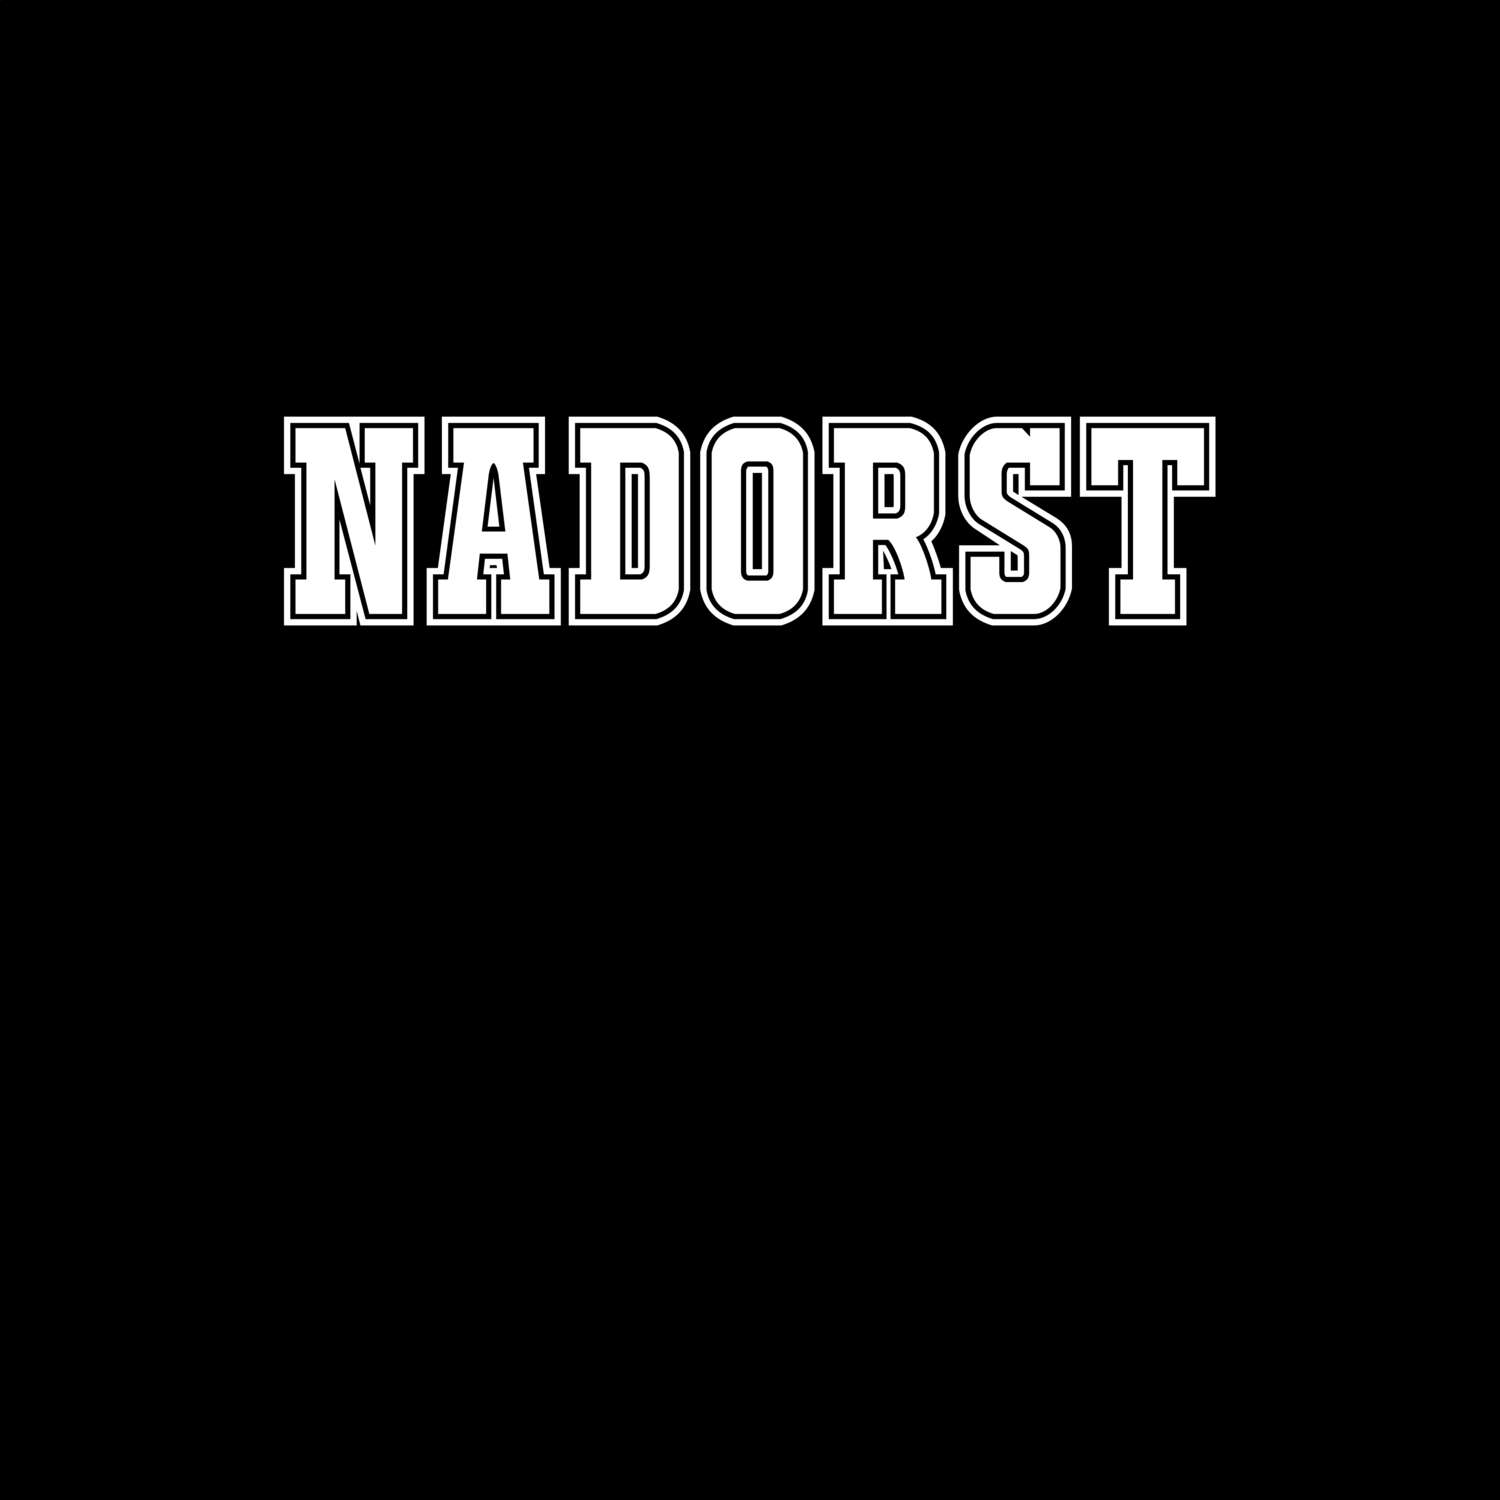 Nadorst T-Shirt »Classic«